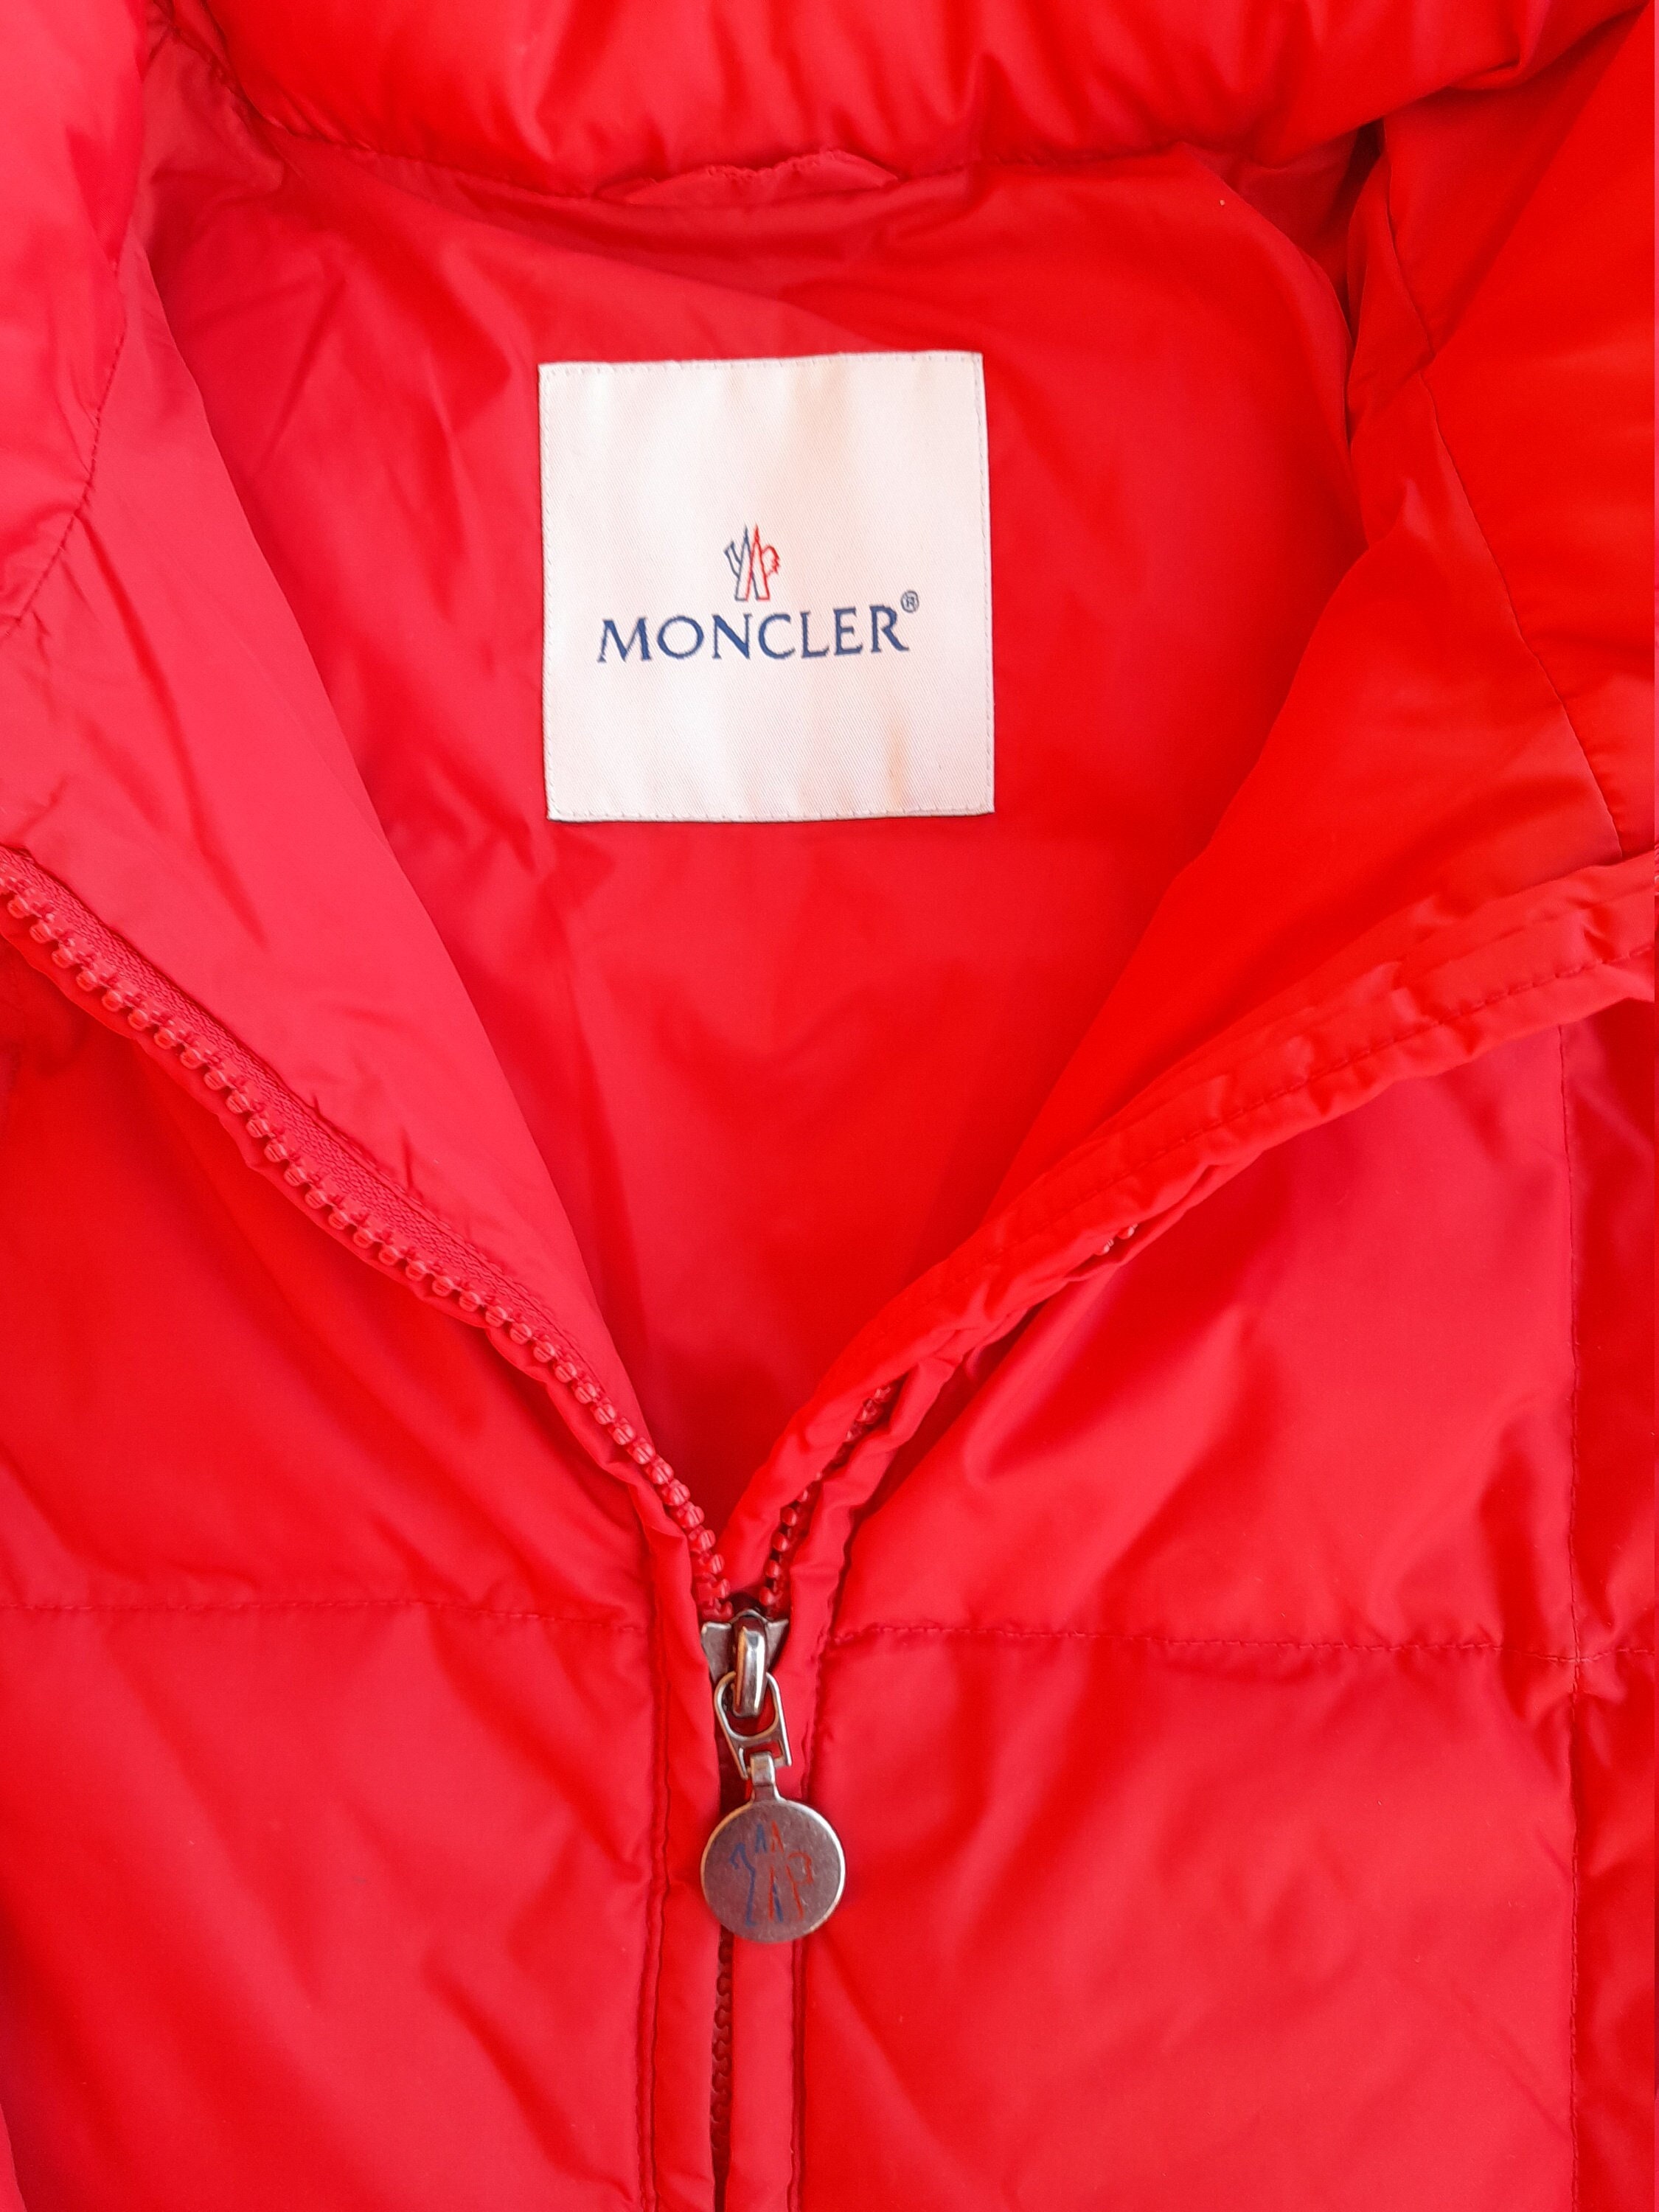 Moncler Jacket - Etsy